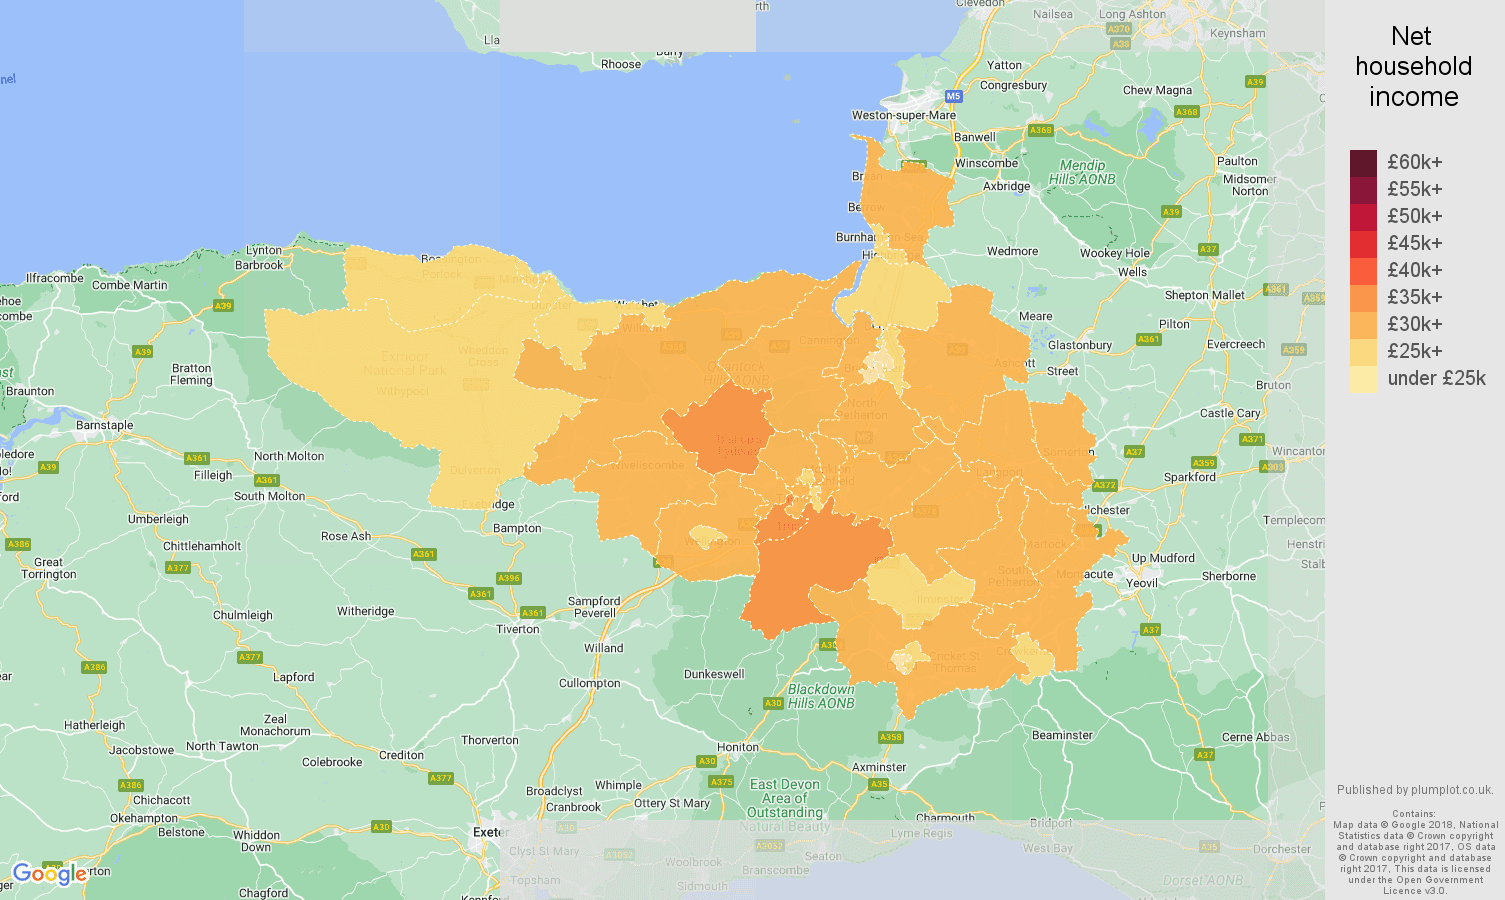 Taunton net household income map